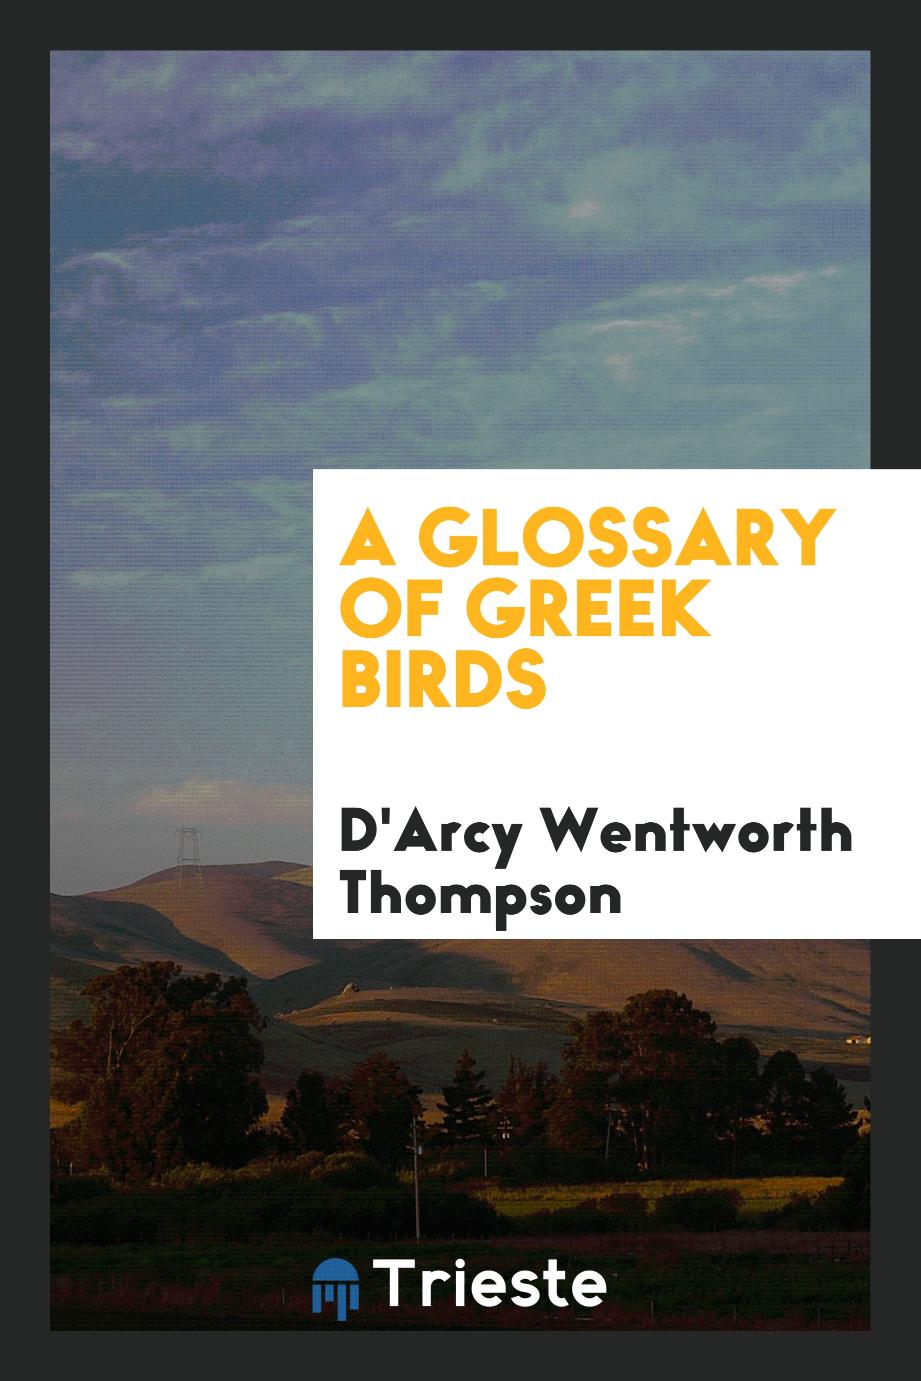 A glossary of Greek birds